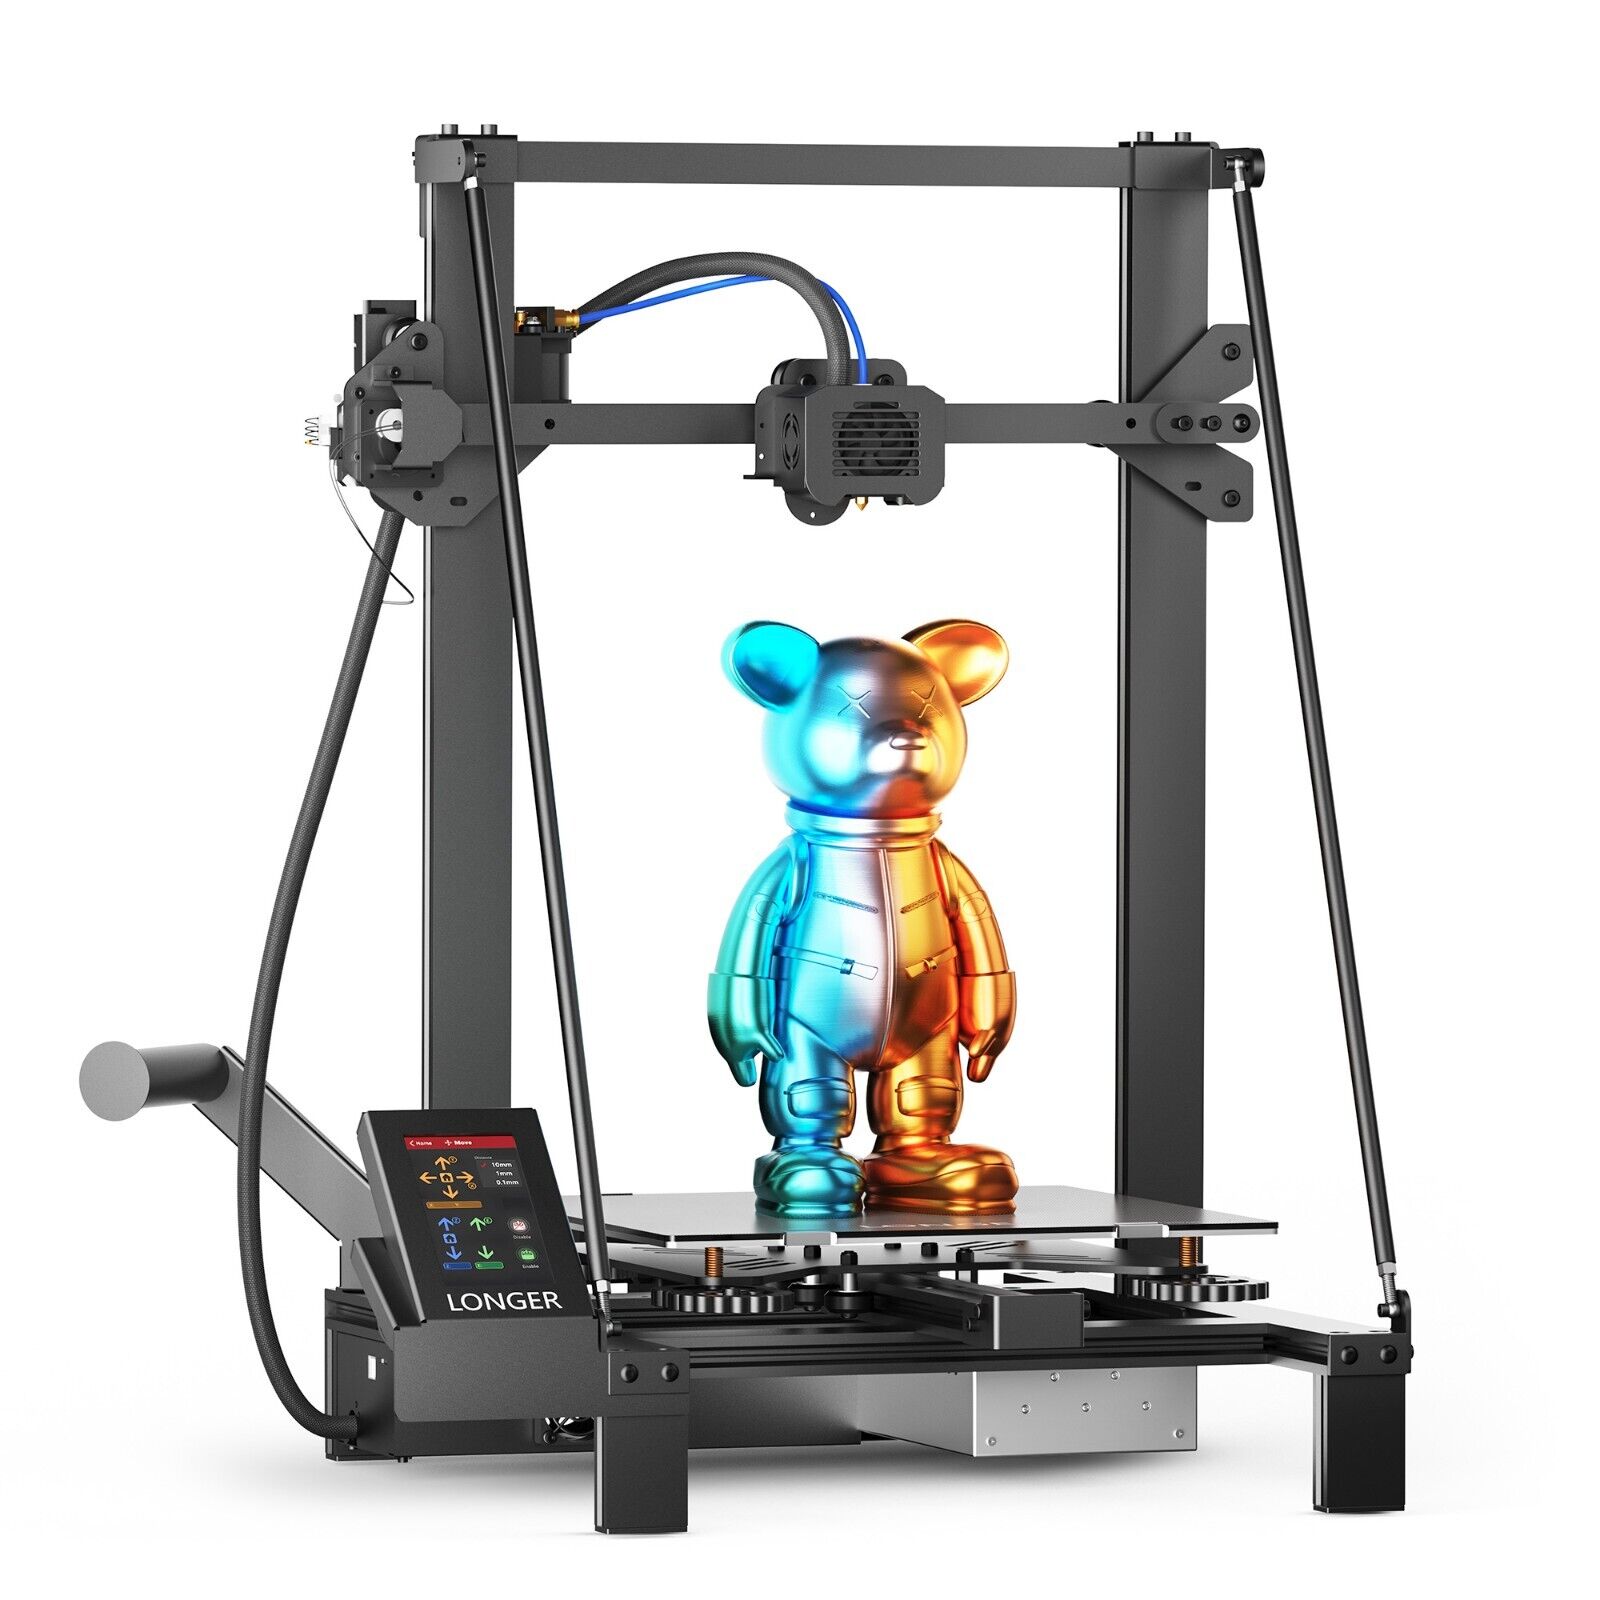 Longer LK5 Pro Silent 3D Printer 300x300x400 mm Large Printing Size